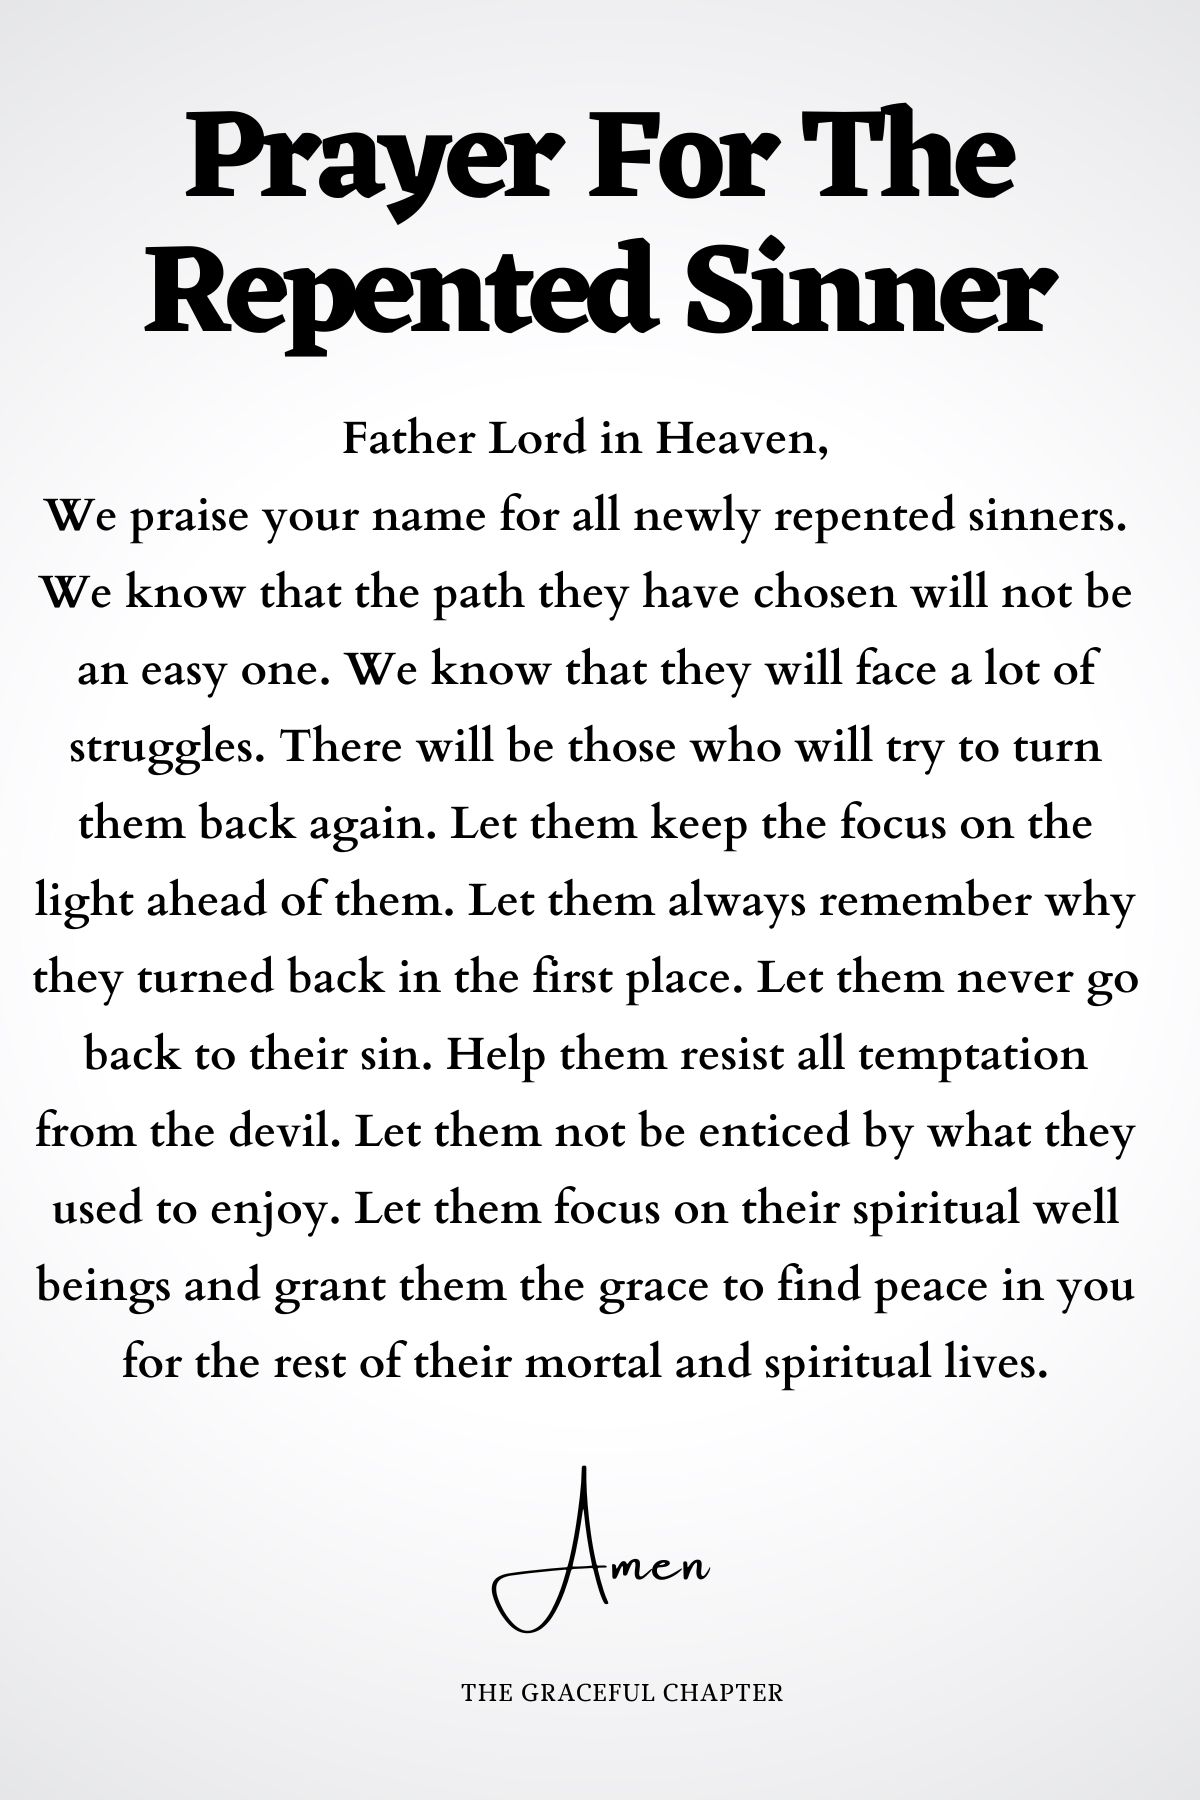 Prayer for the repented sinner